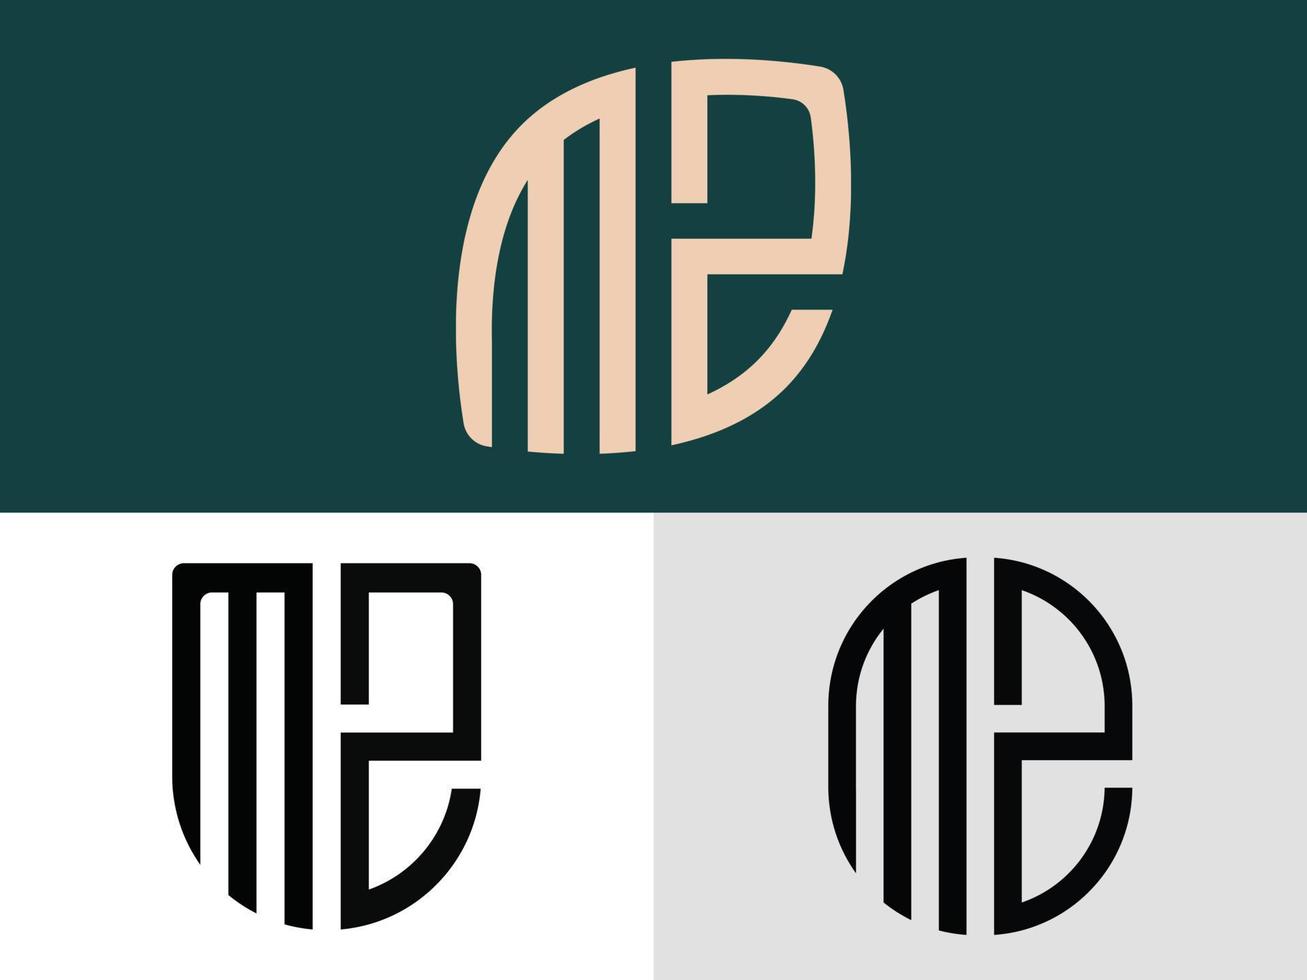 kreative anfangsbuchstaben mz logo designs paket. vektor